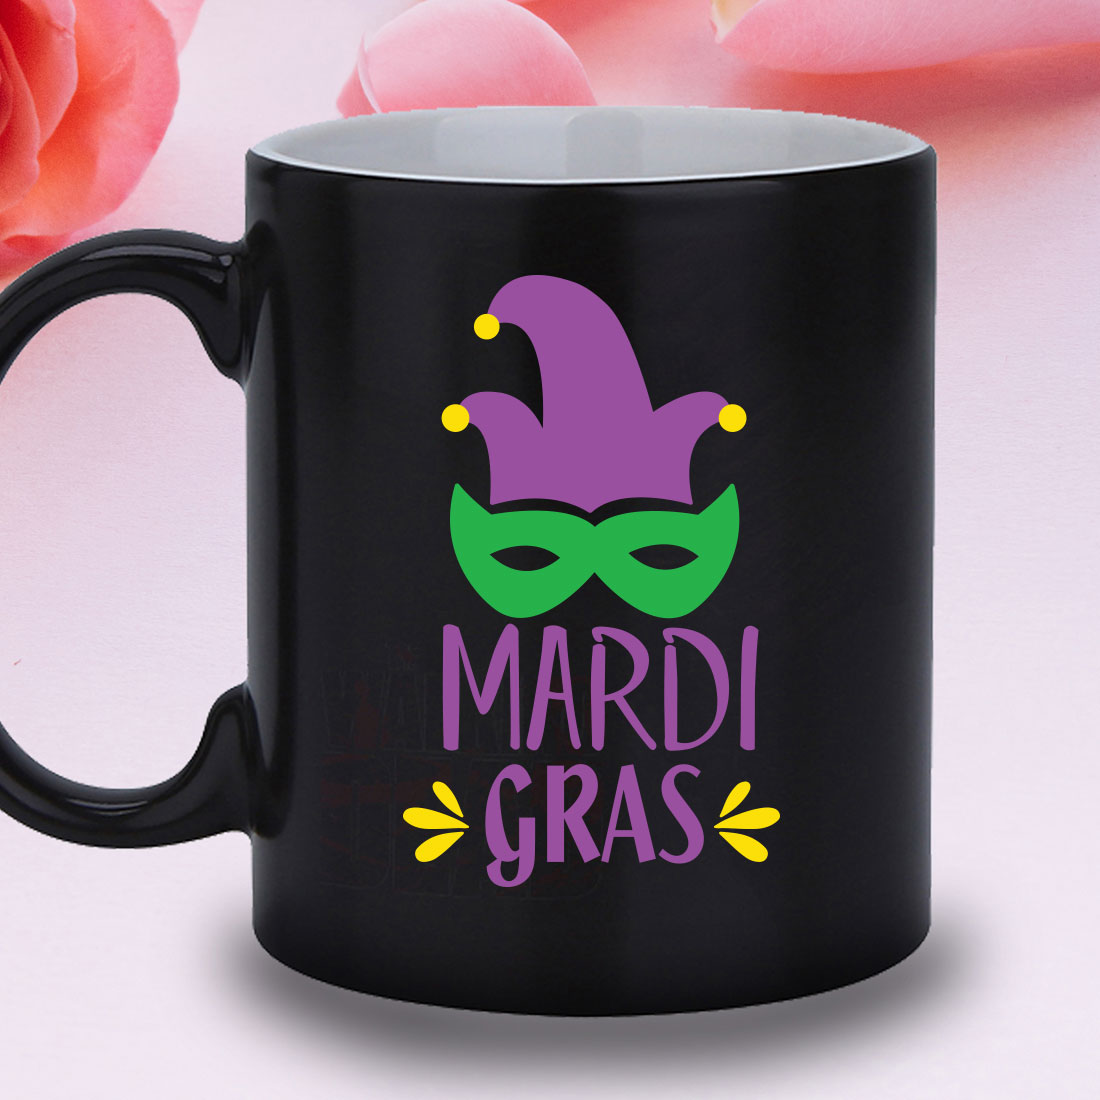 Black mug with a mardi gras mask on it.